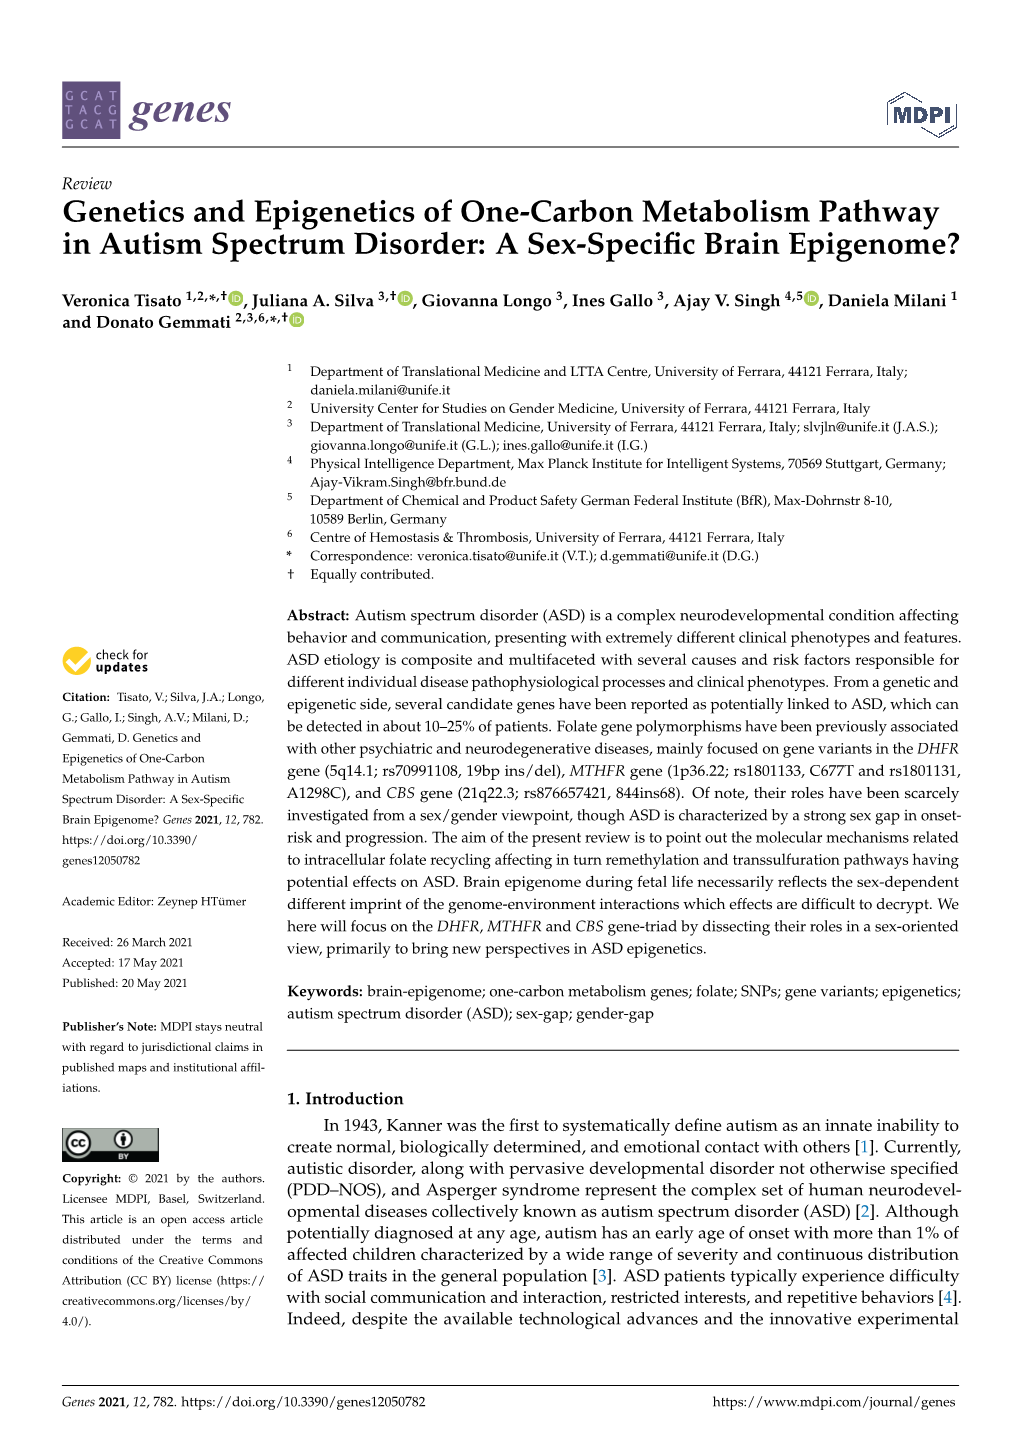 Genetics and Epigenetics of One-Carbon Metabolism Pathway in Autism Spectrum Disorder: a Sex-Speciﬁc Brain Epigenome?